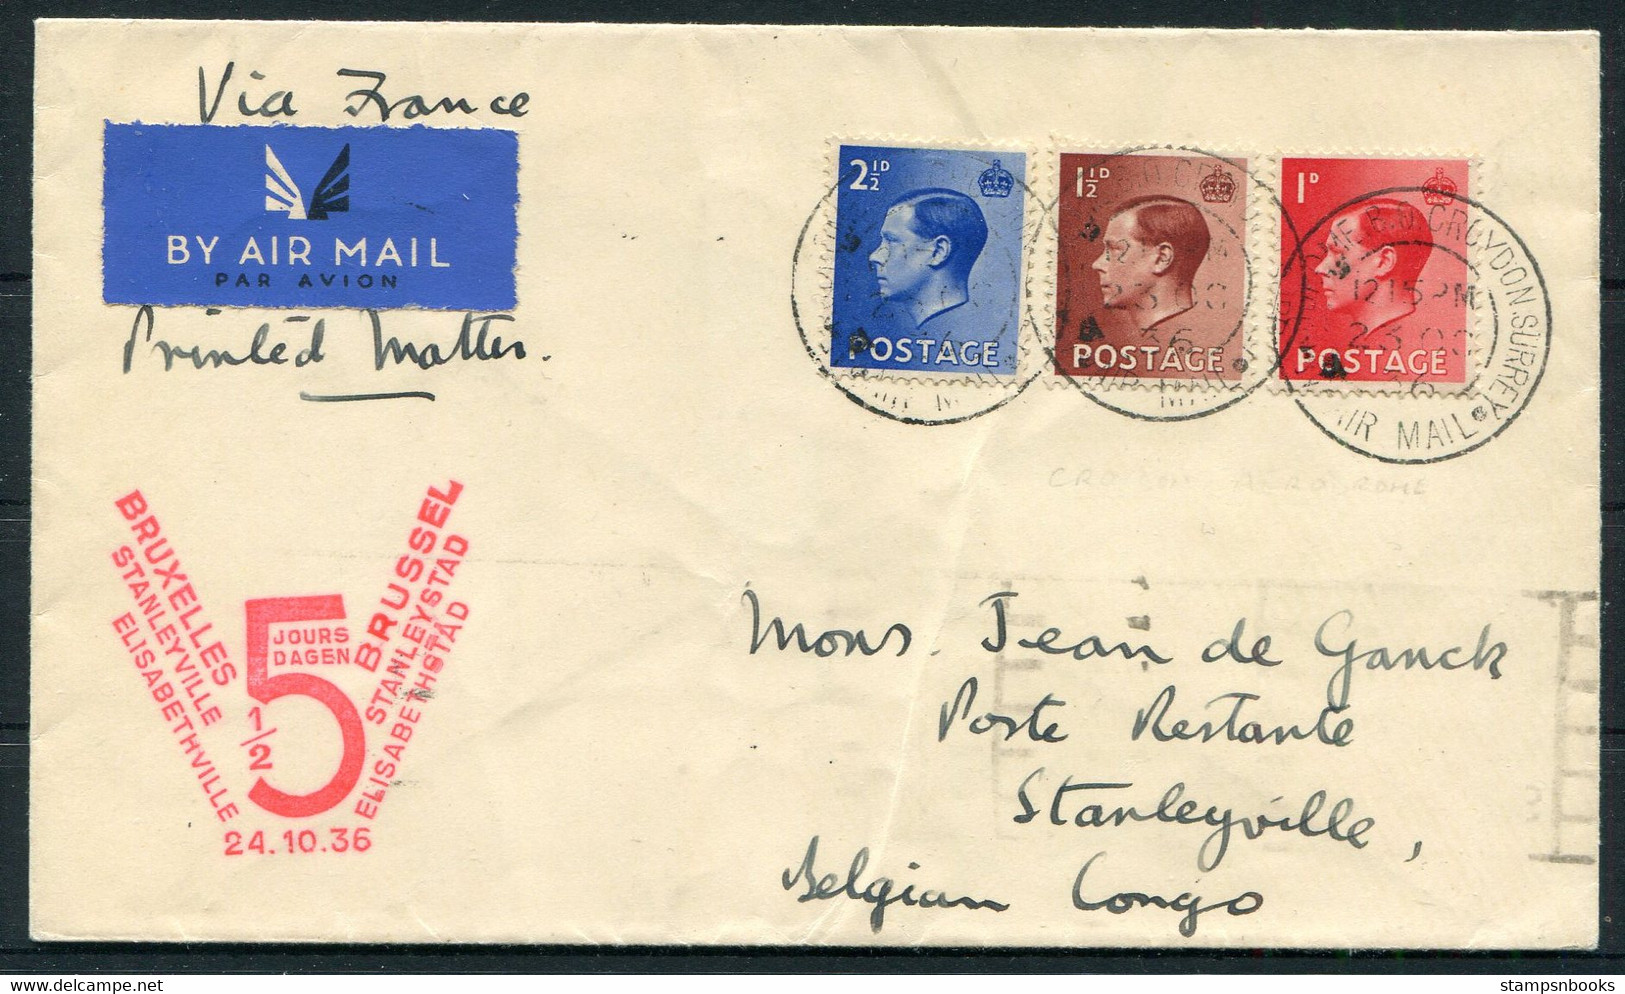 1936 (Oct 23rd) Croydon Aerodrome Air France / SABENA First Flight Airmail Cover - Stanleyville,Belgian Congo Via Paris - Covers & Documents